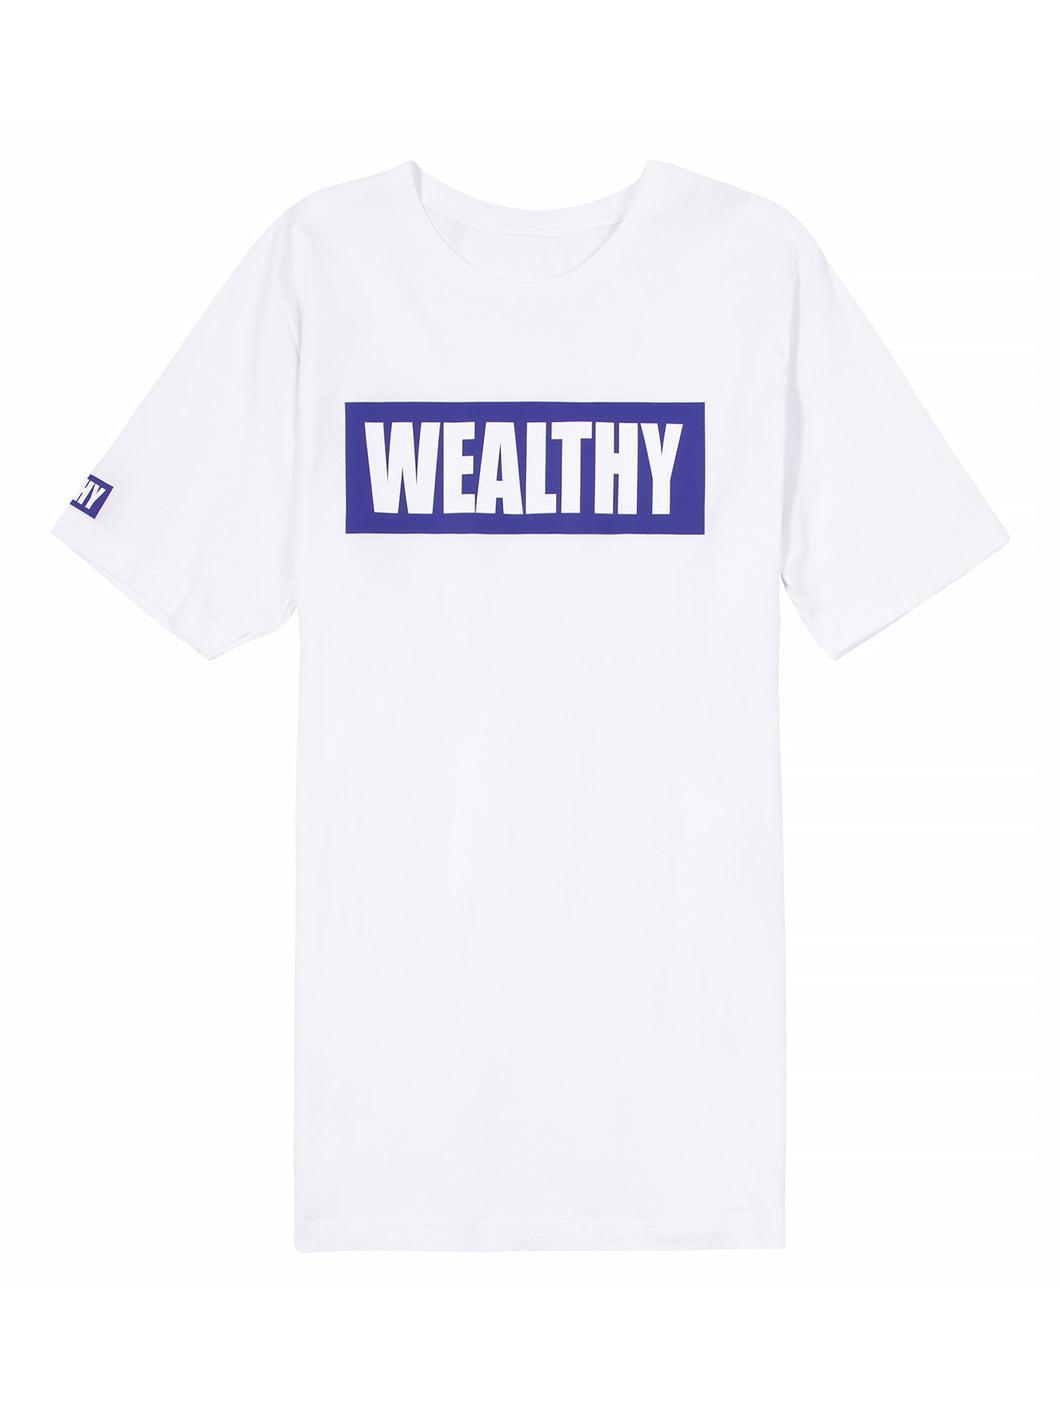 Wealthy Tee (White/Purple)